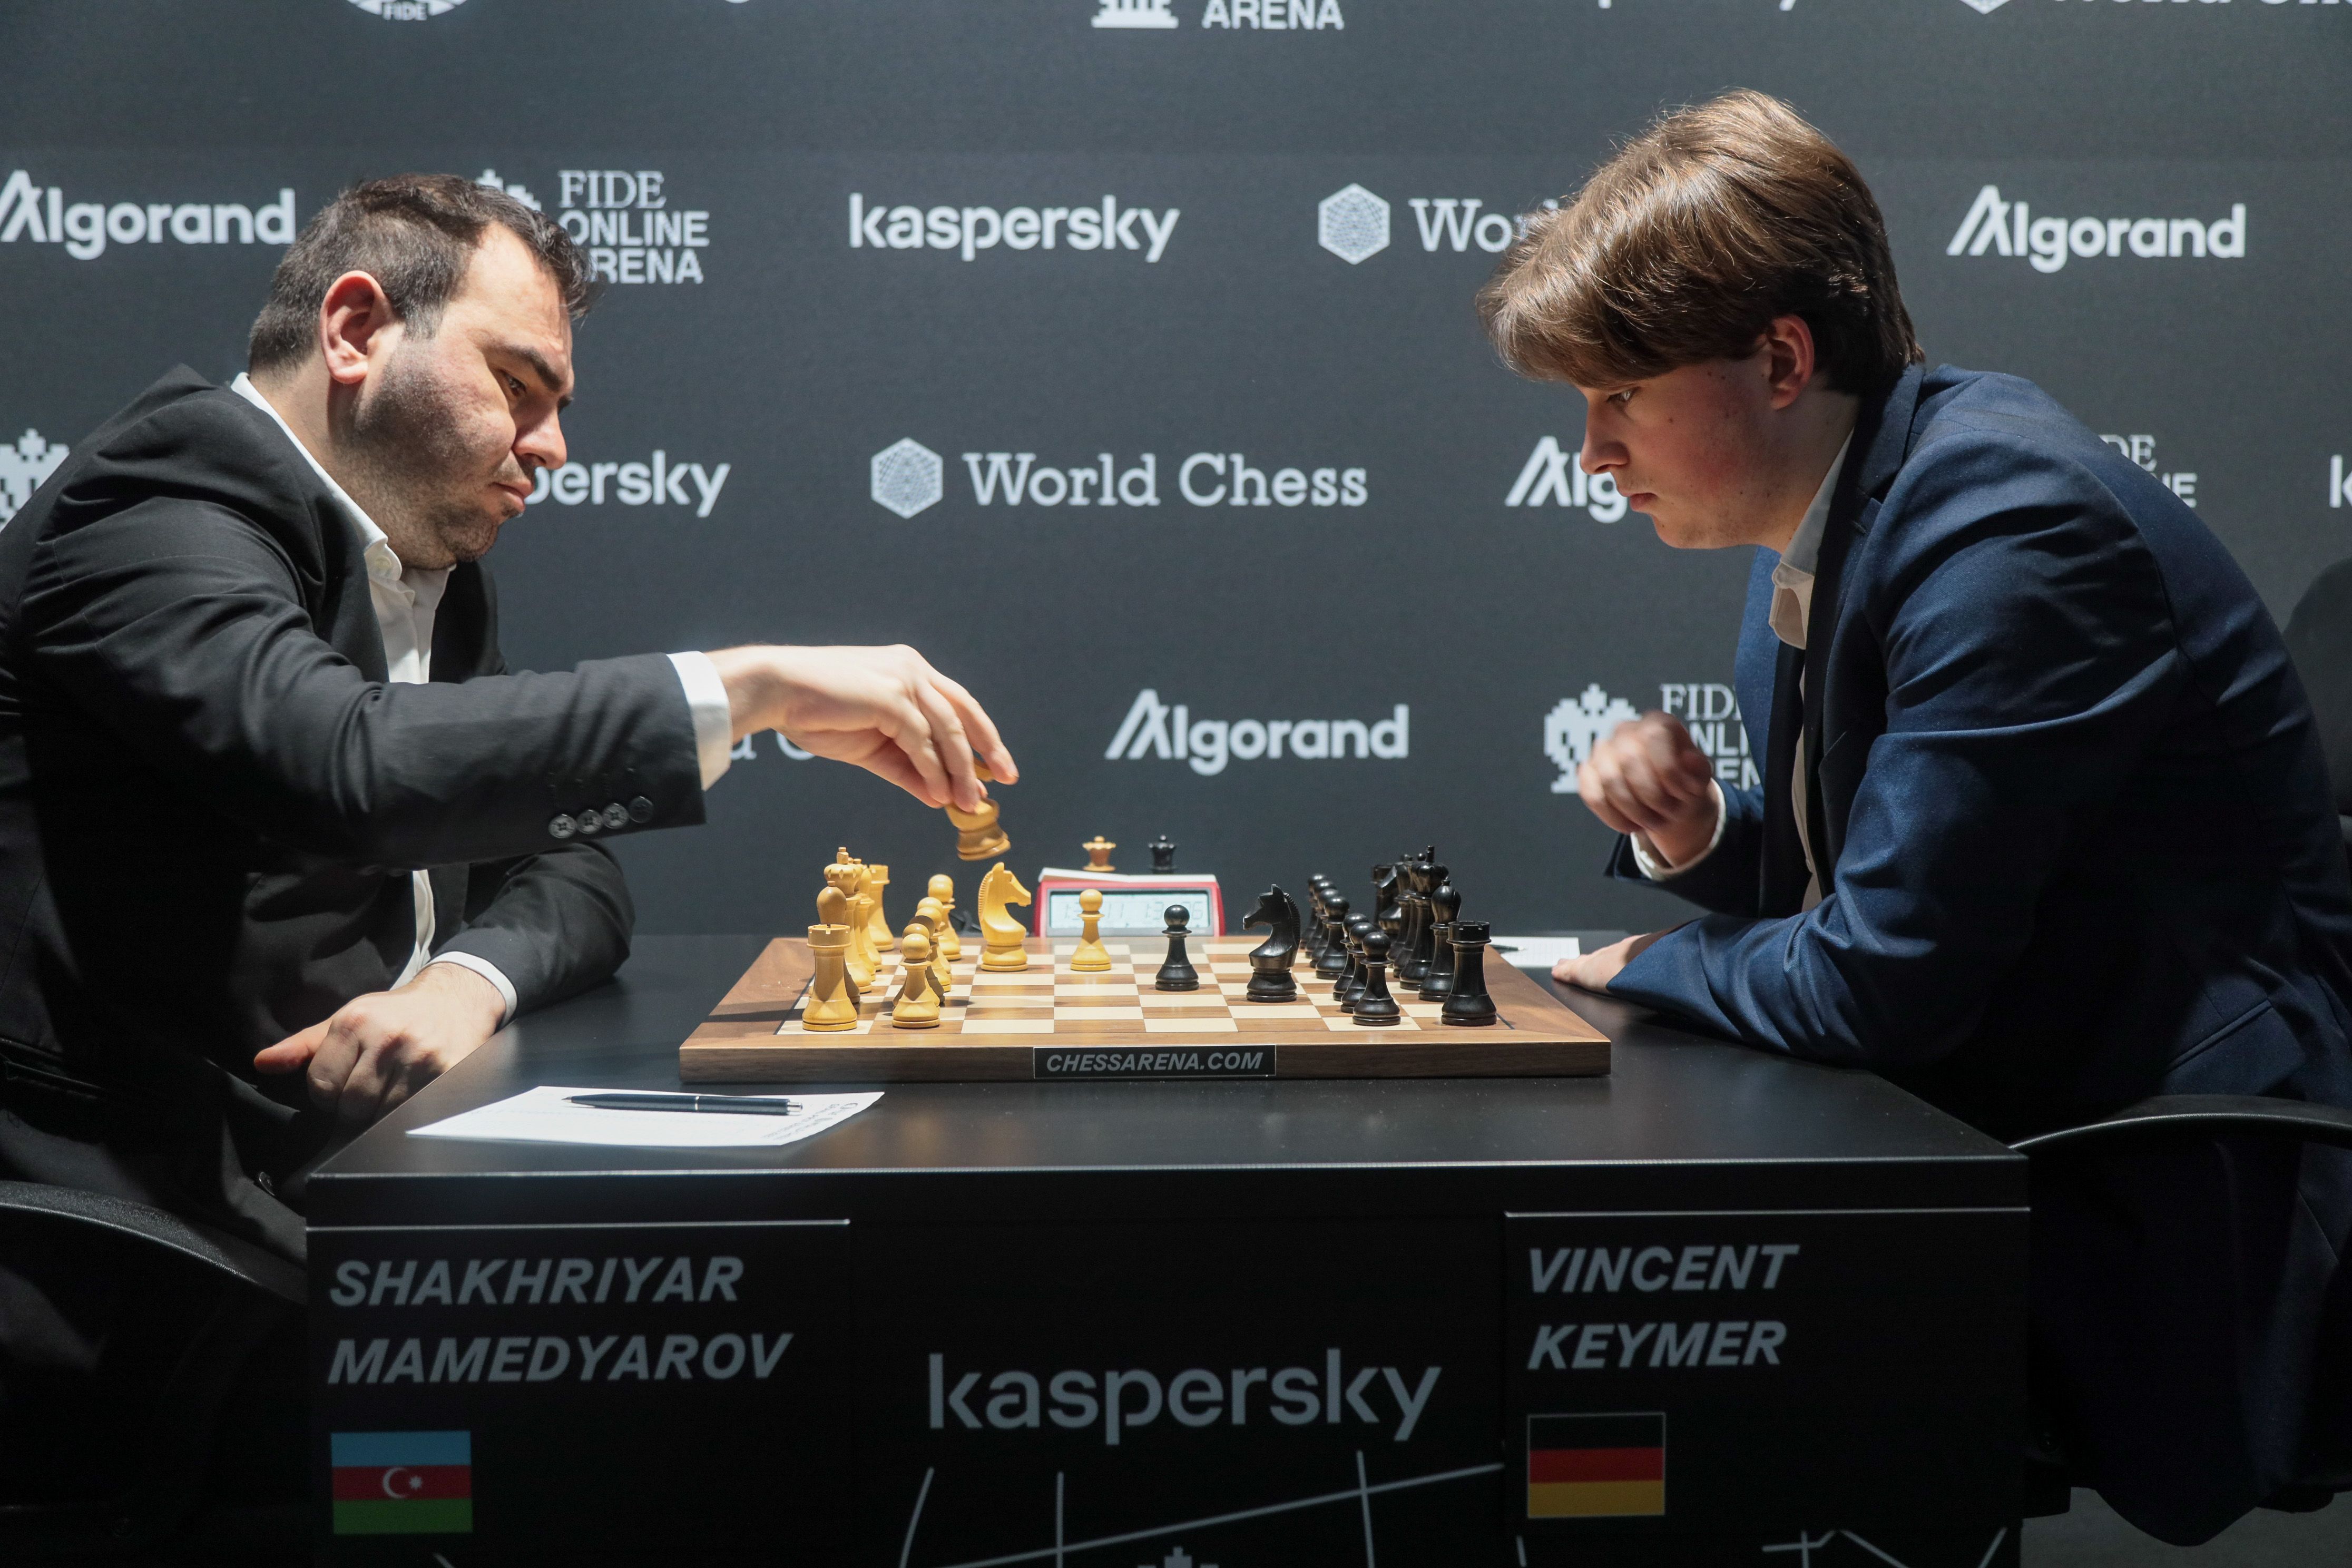 Hikaru Nakamura wins in Berlin as popular chess streamer leads